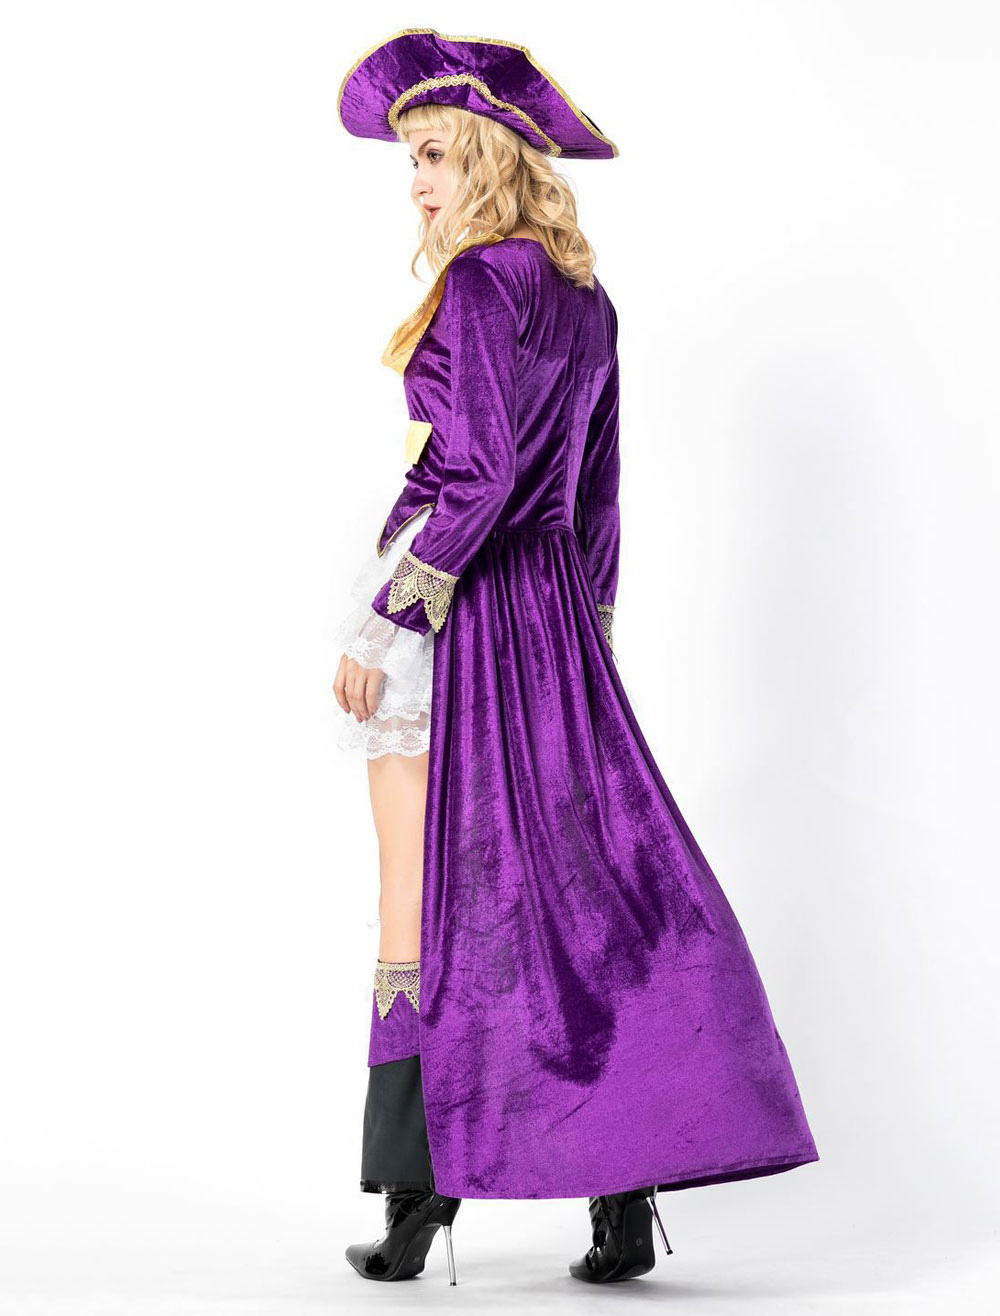 Pirate Costume Halloween Women Purple Dresses Set 2480